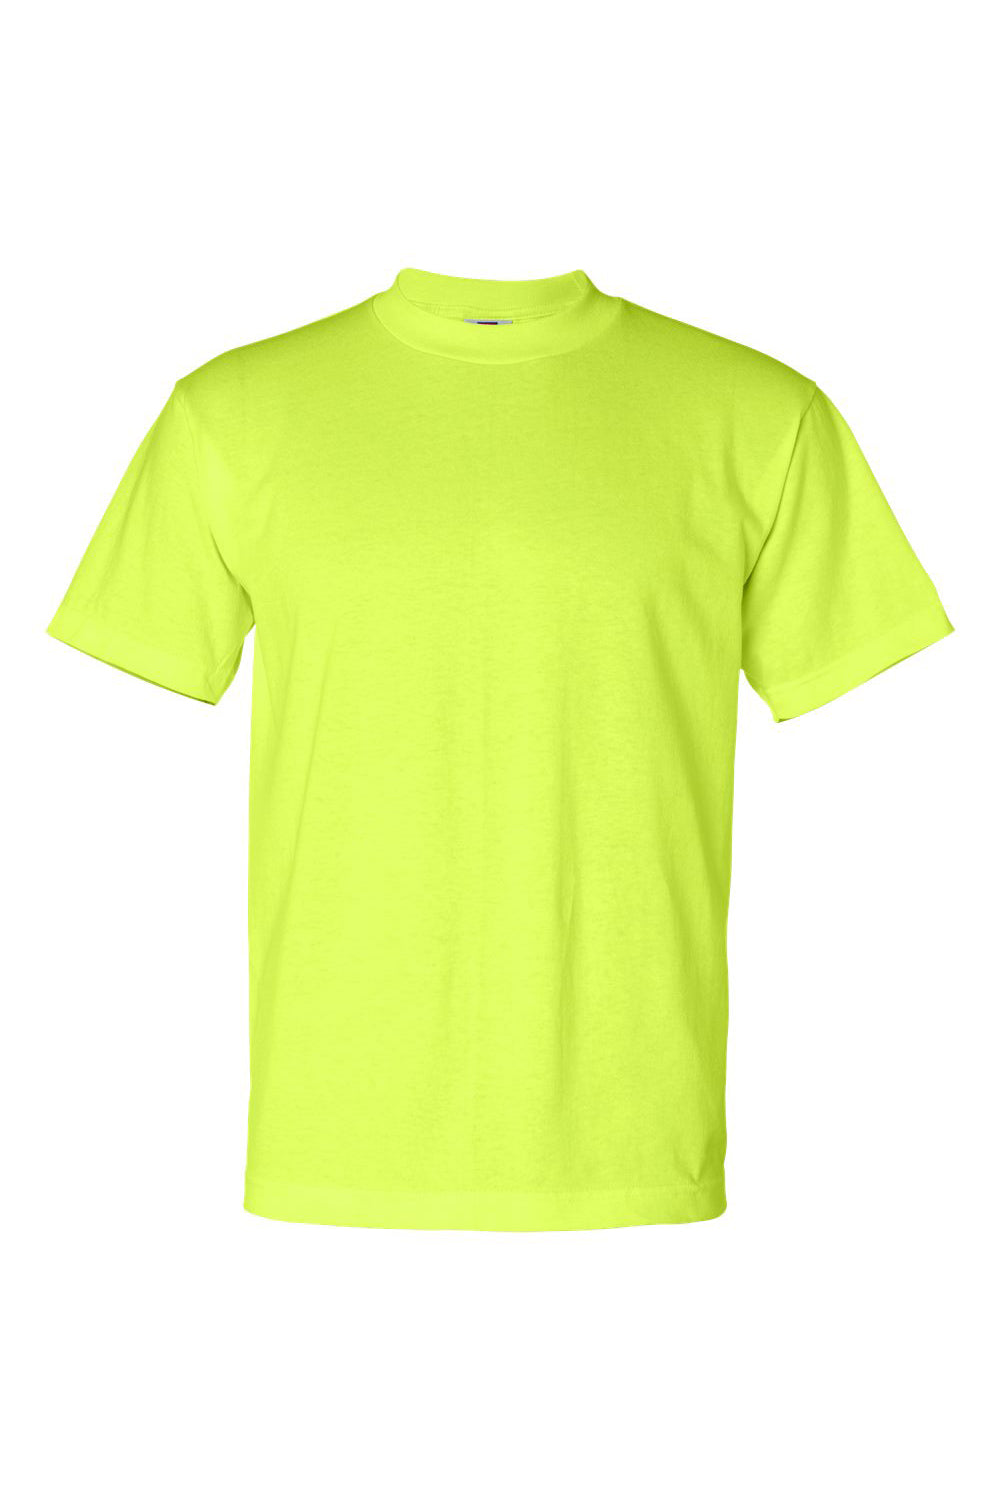 Bayside 1701 Mens USA Made Short Sleeve Crewneck T-Shirt Safety Green Flat Front